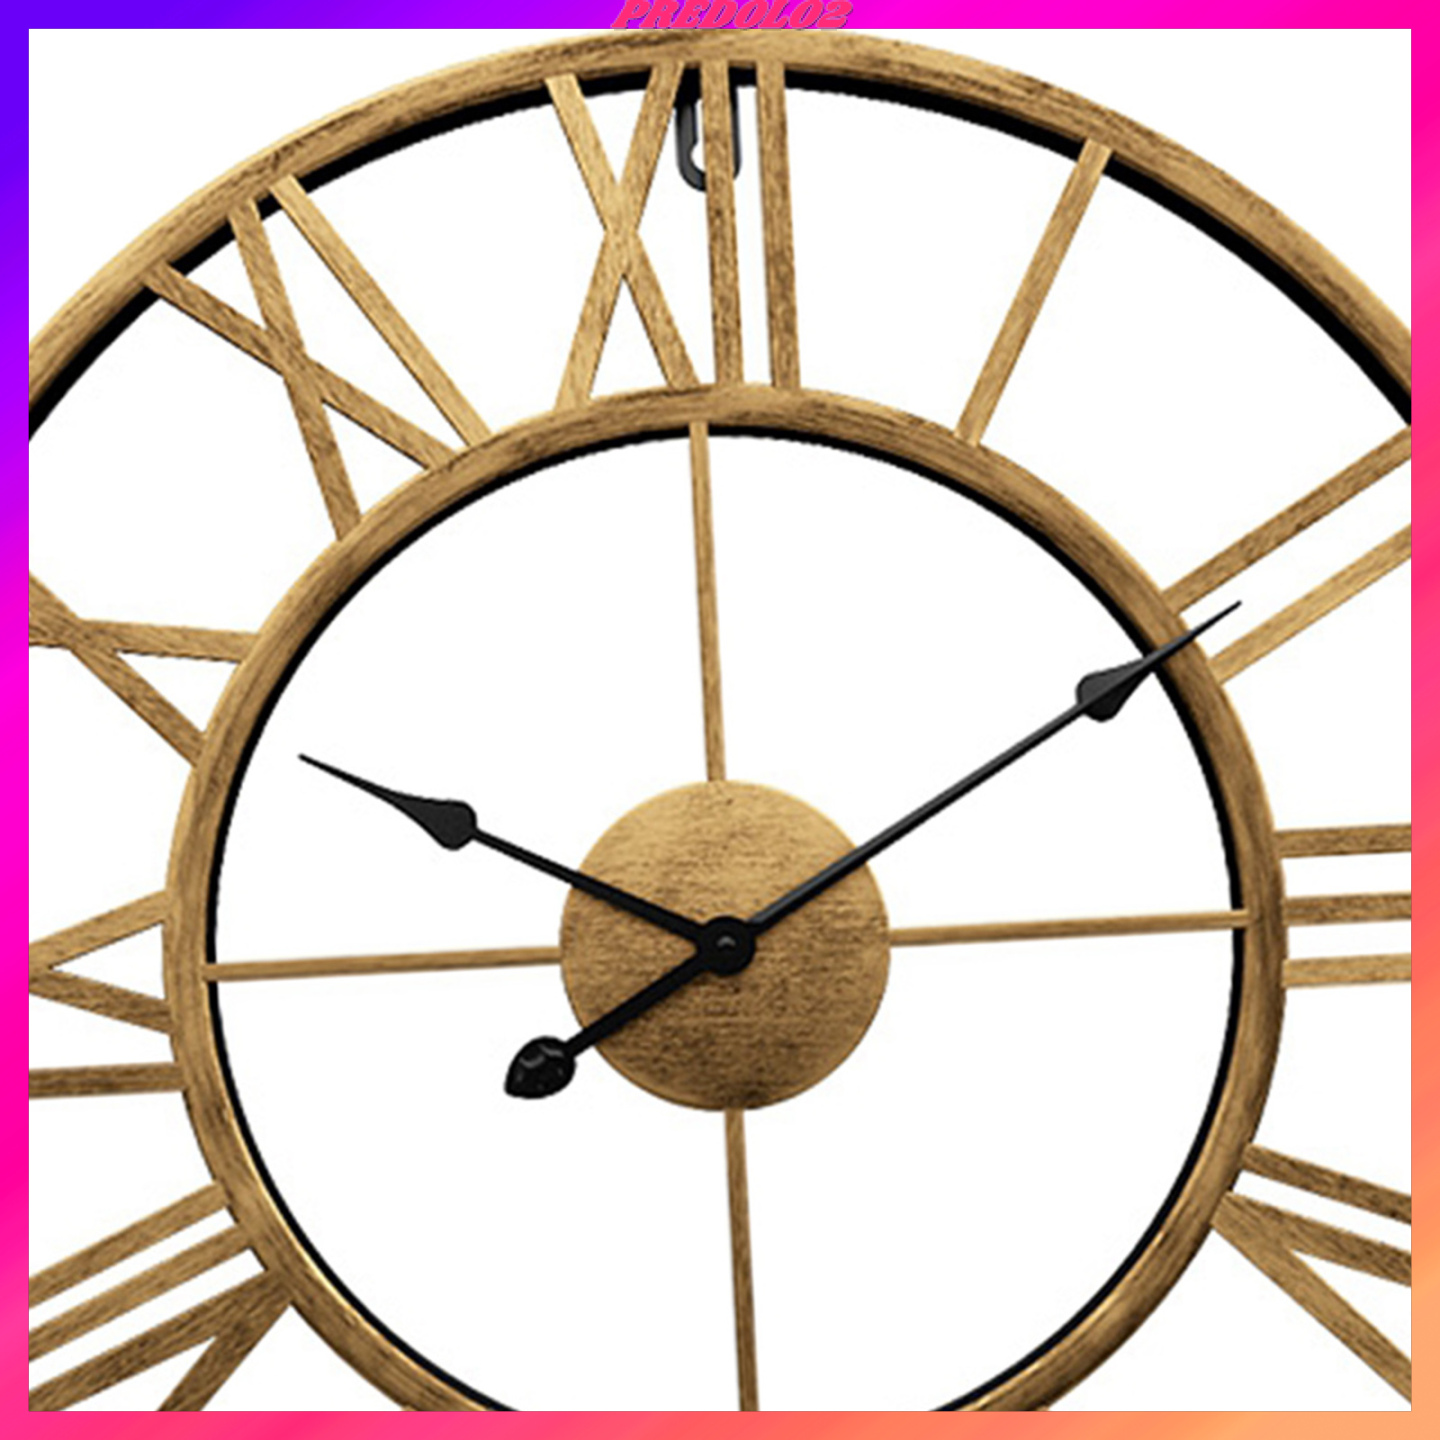 [PREDOLO2]3D Wall Clock Quartz Design Non-ticking Silent Home Office School Wall Clock